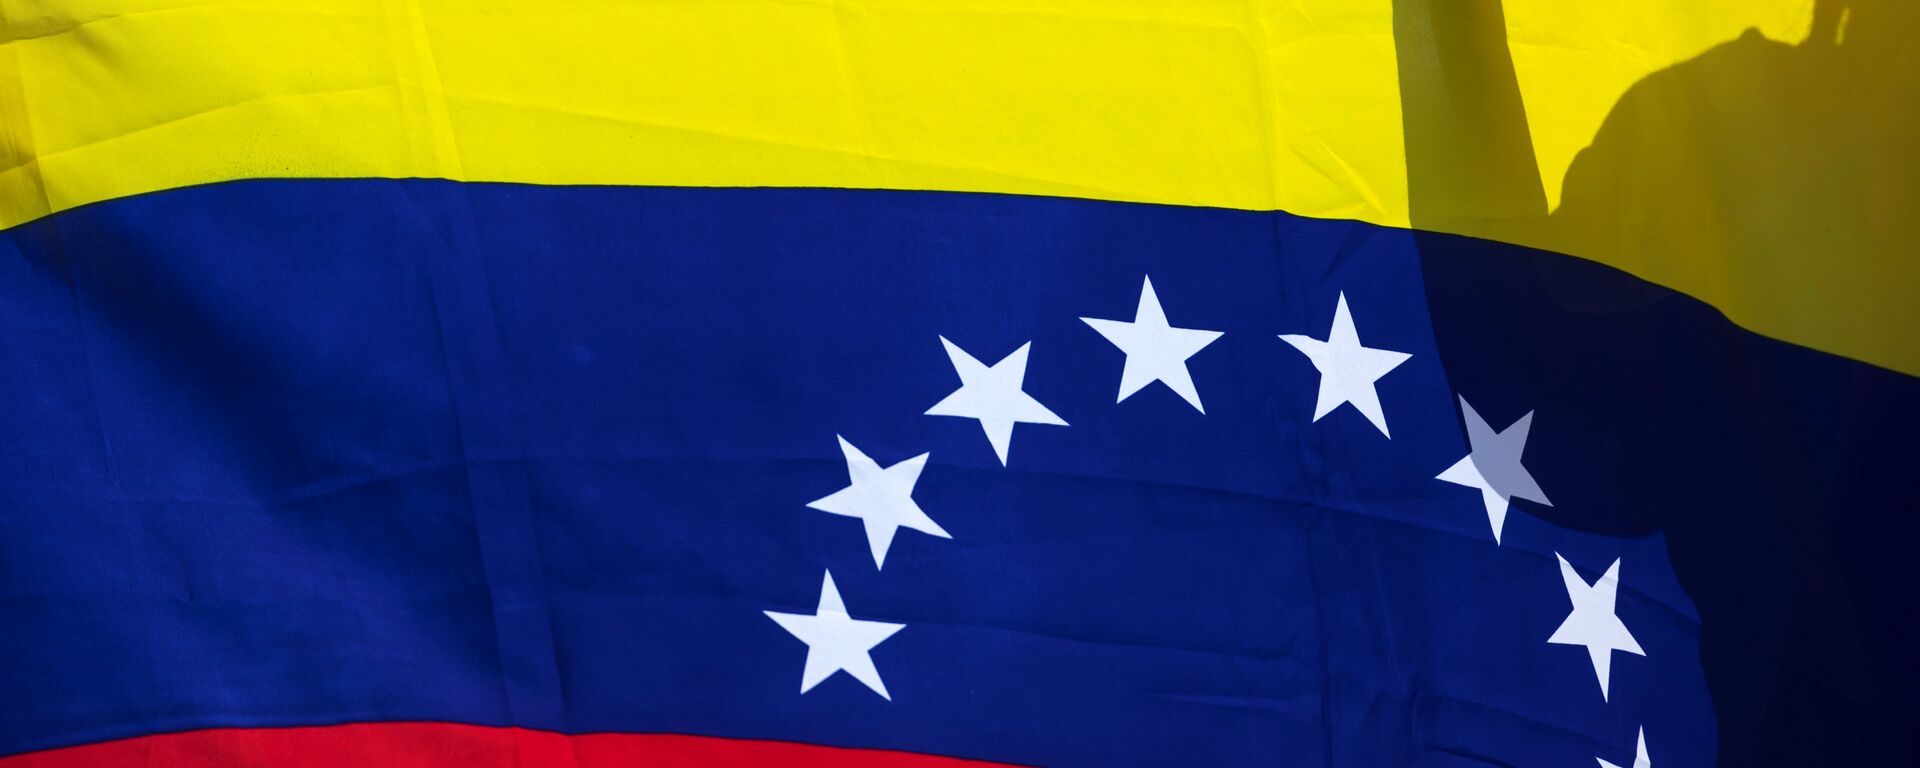 Bandera de Venezuela - Sputnik Mundo, 1920, 07.07.2021